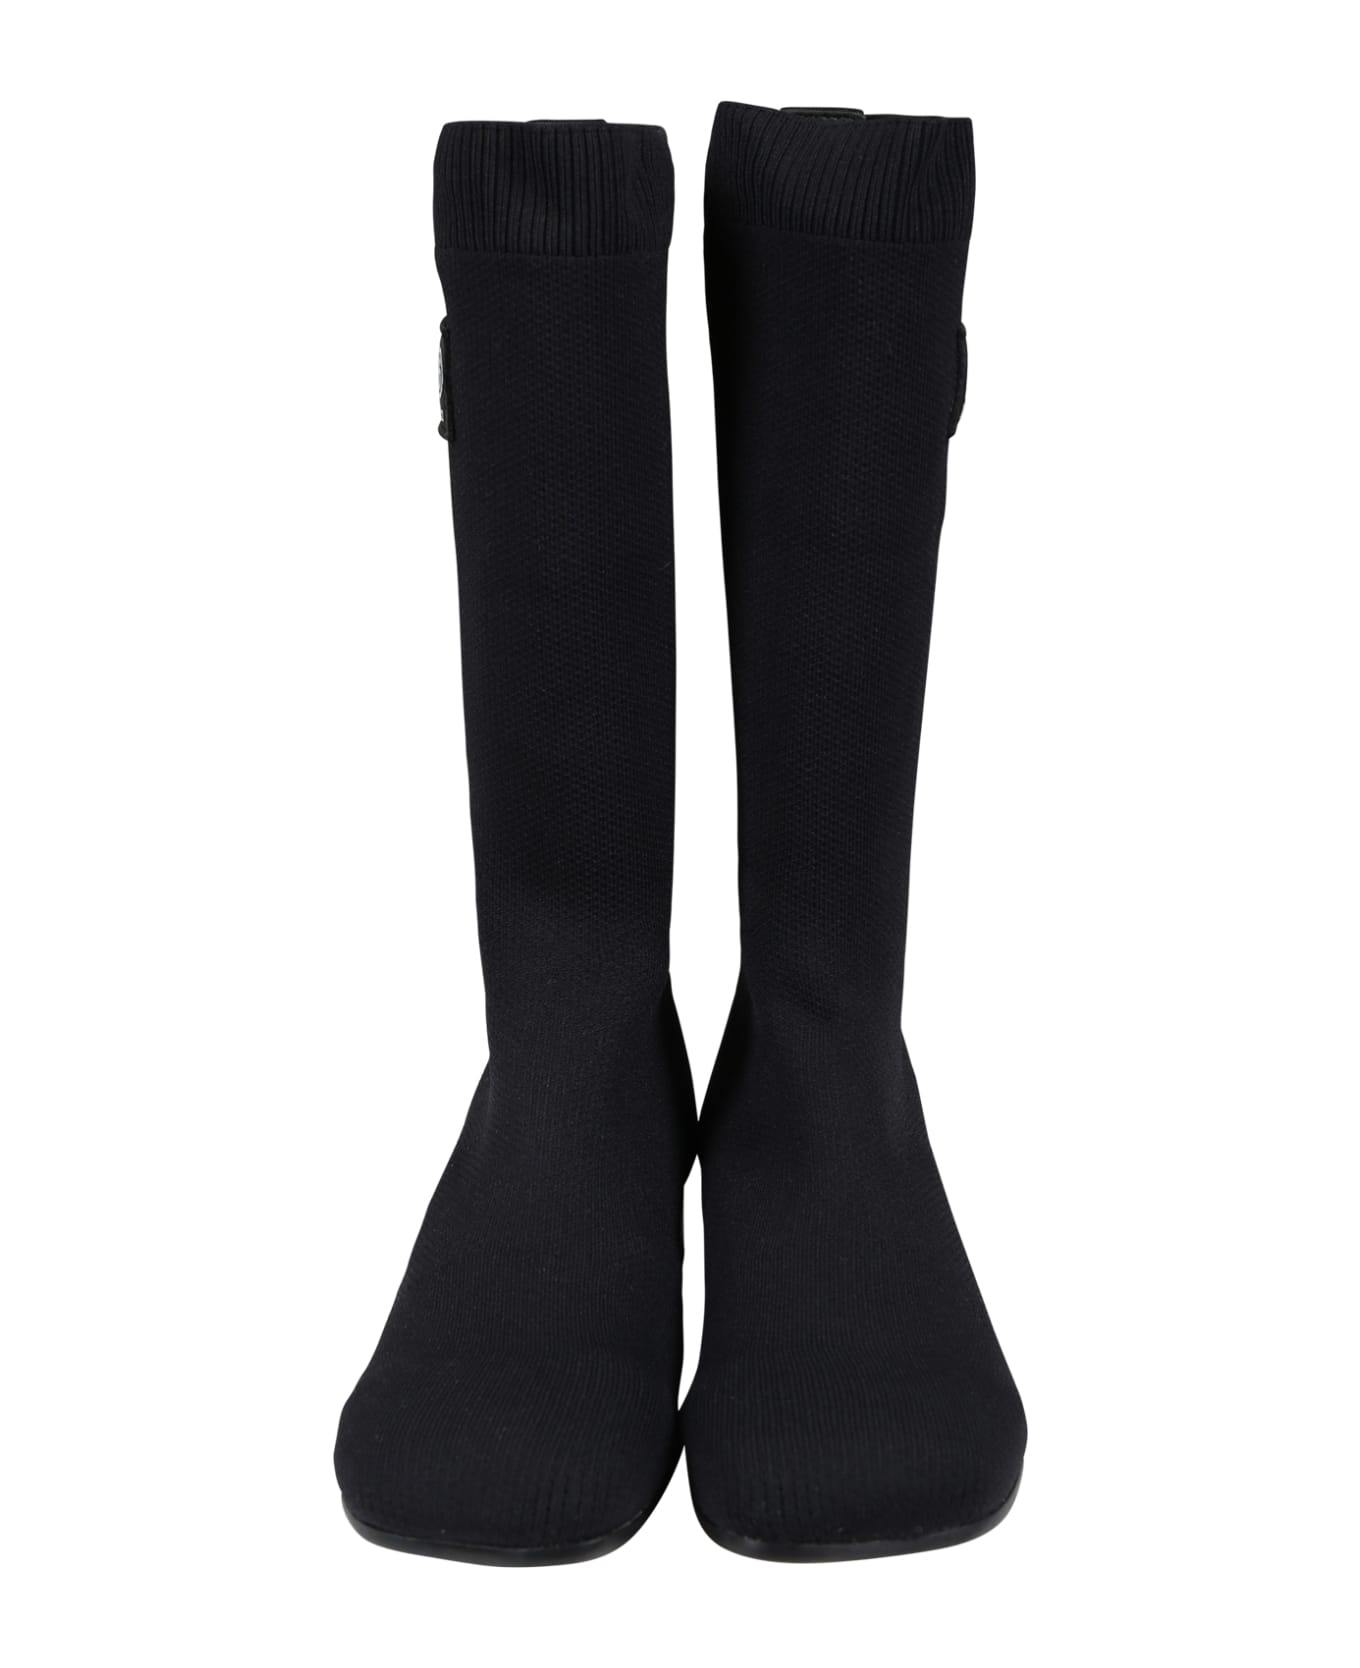 MM6 Maison Margiela Black Boots For Girl With Logo - Black シューズ